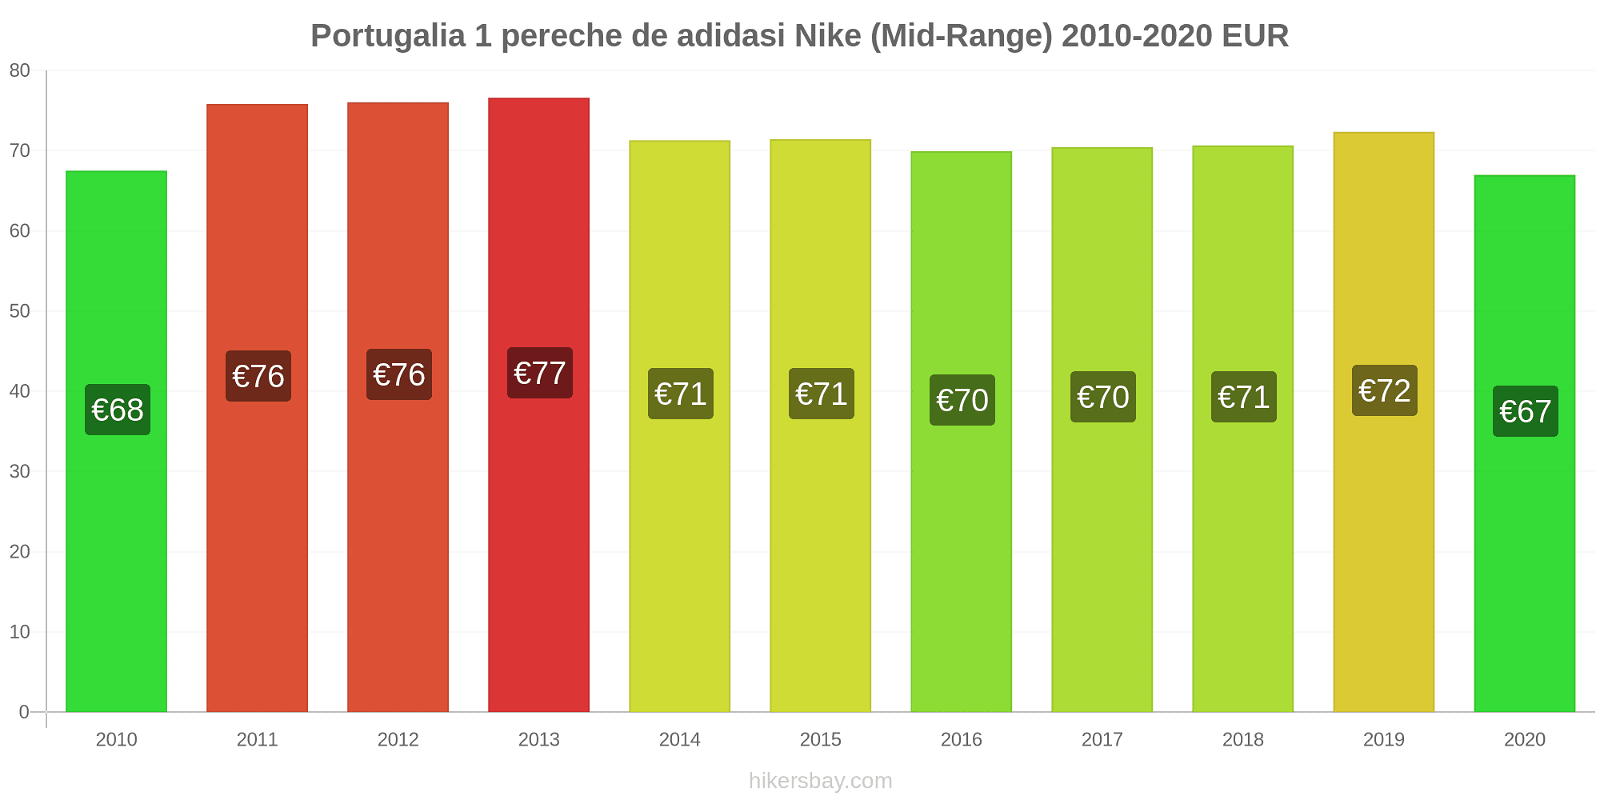 Portugalia modificări de preț 1 pereche de adidasi Nike (Mid-Range) hikersbay.com